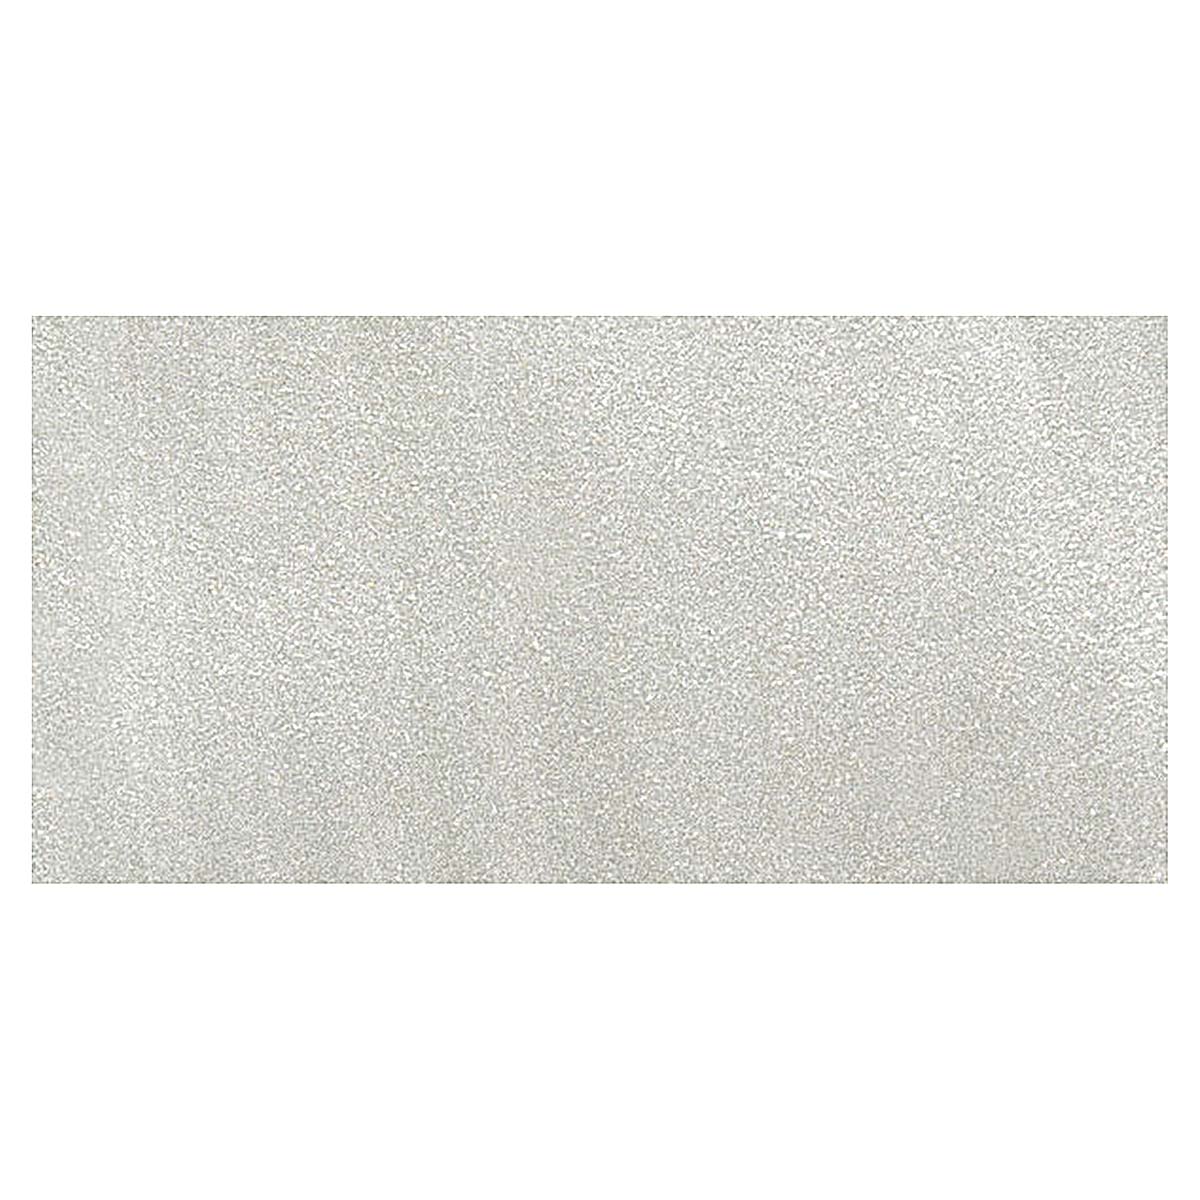 Jacquard Lumiere Metallic Acrylic Paint 2.25Oz-Pearlescent White